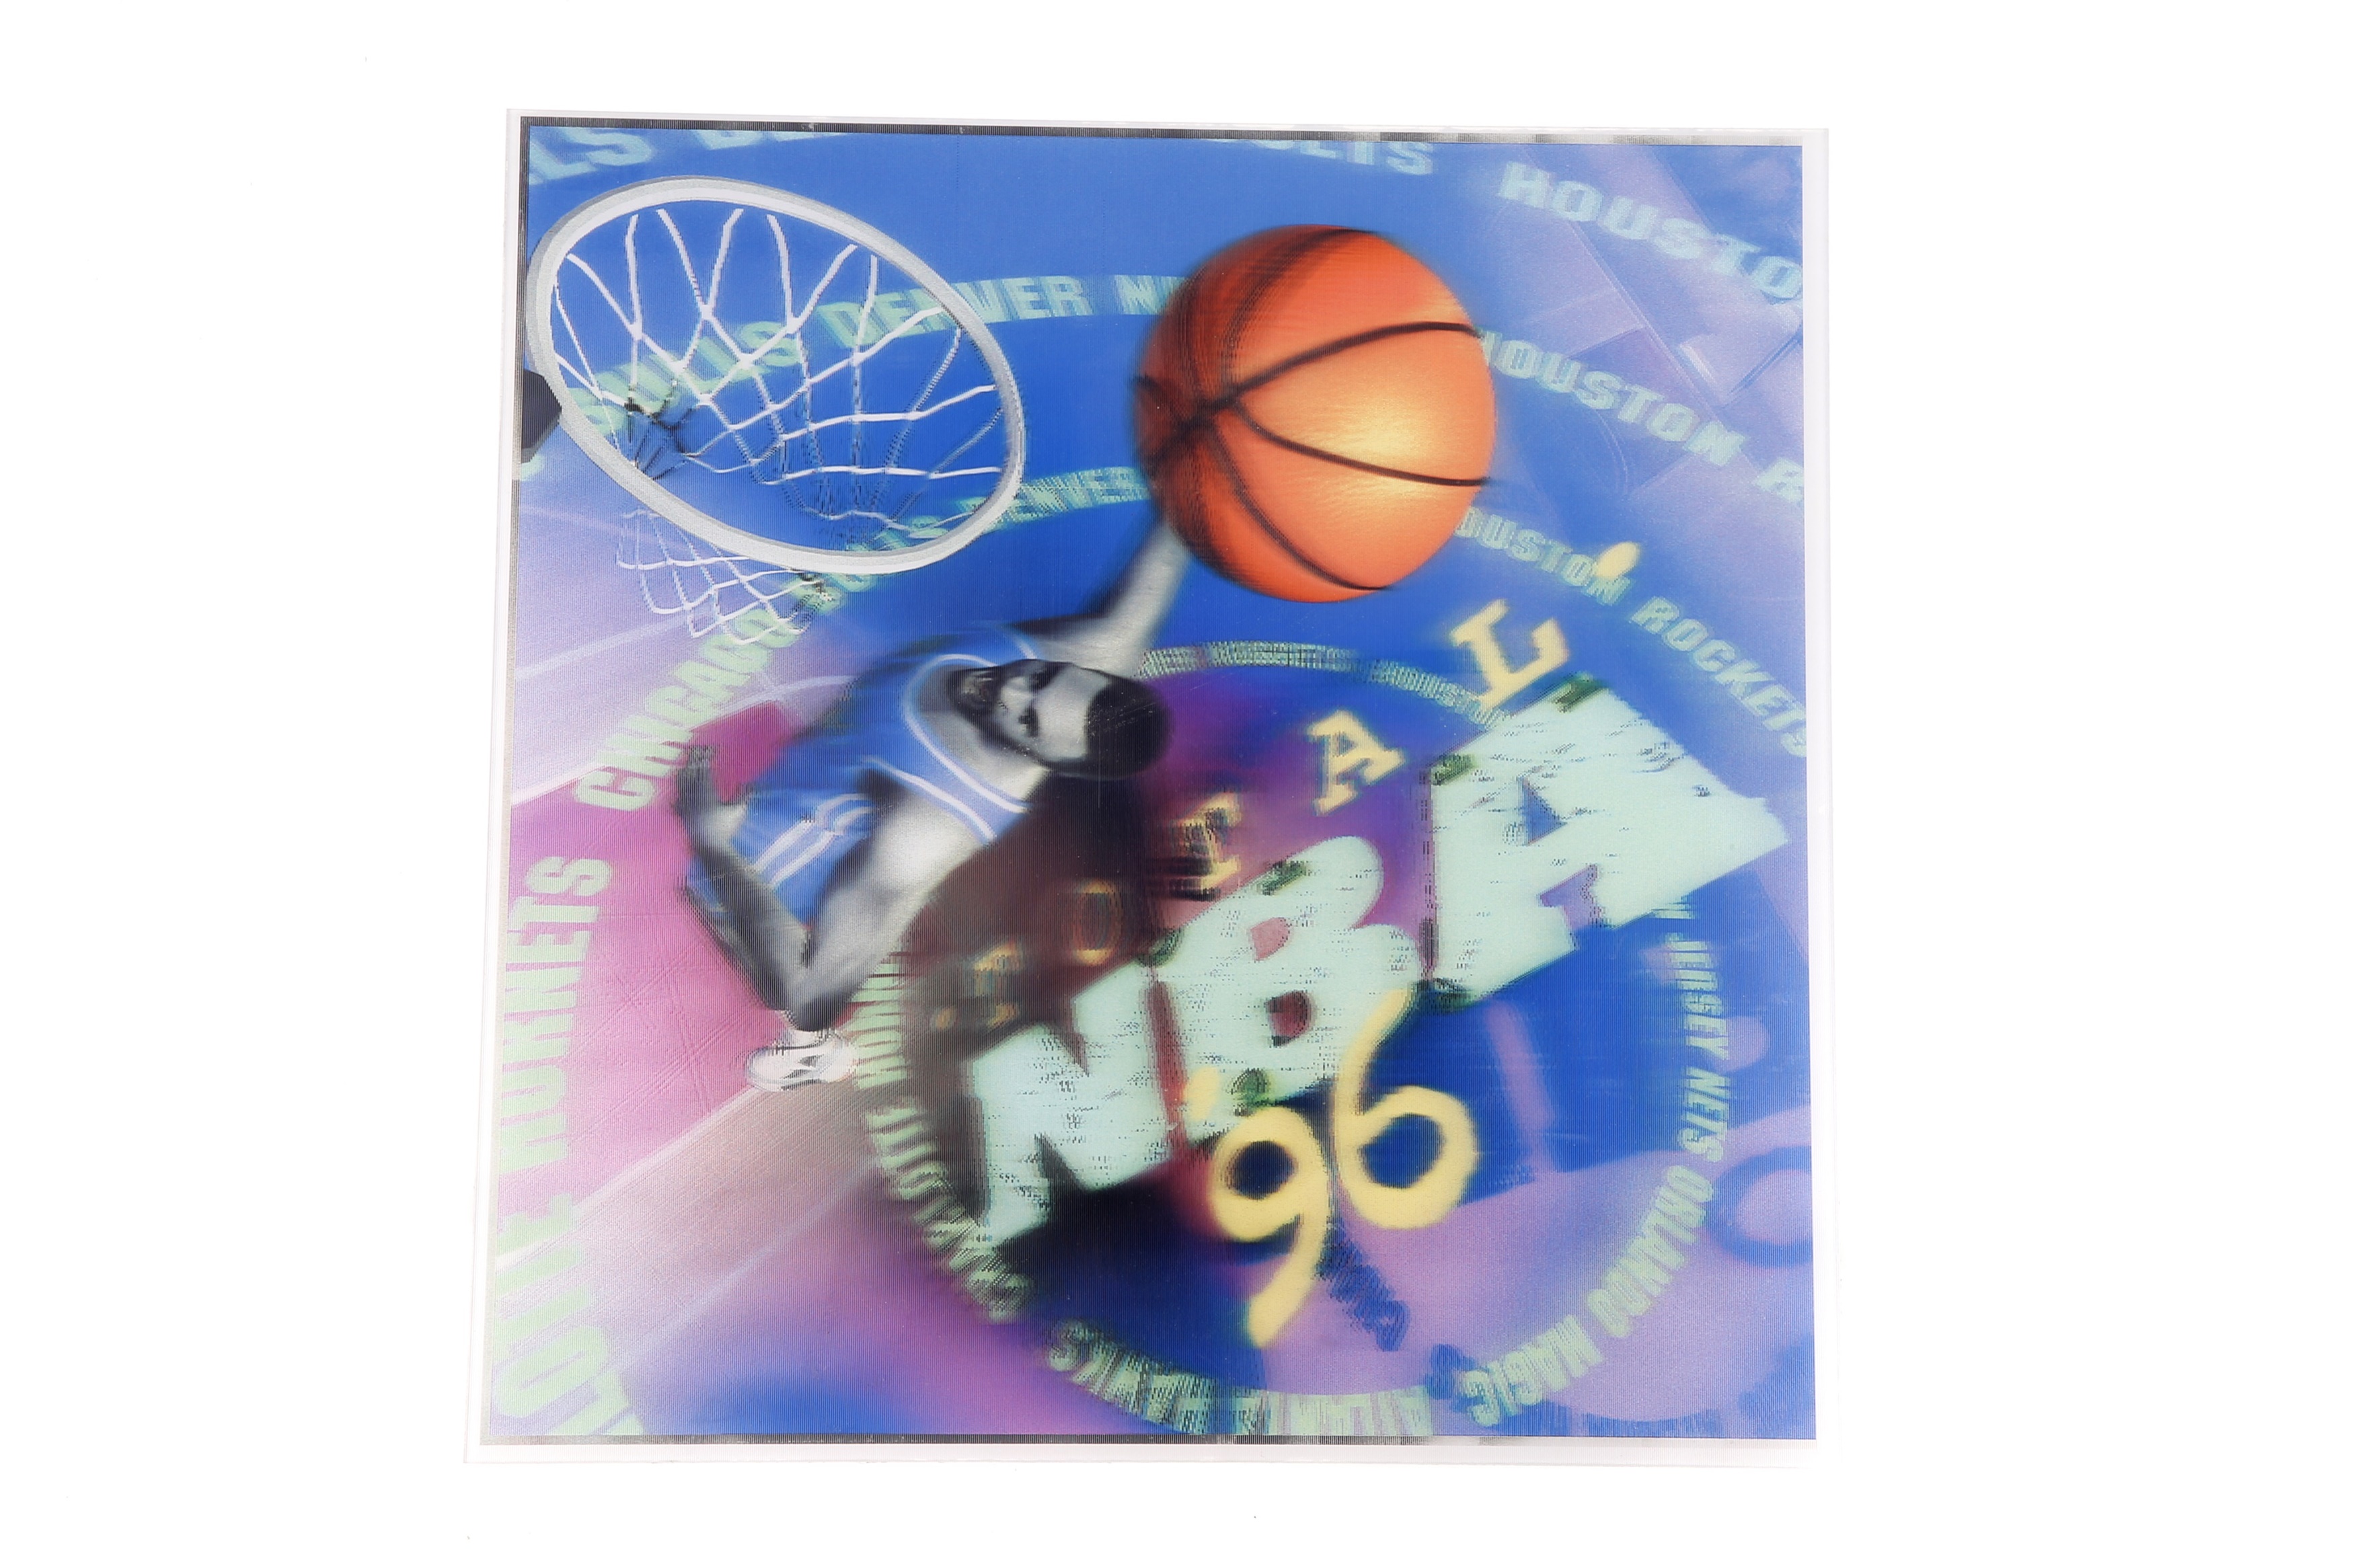 3D Lenticular Design Poster for Playstation Basketball Game Total NBA 96